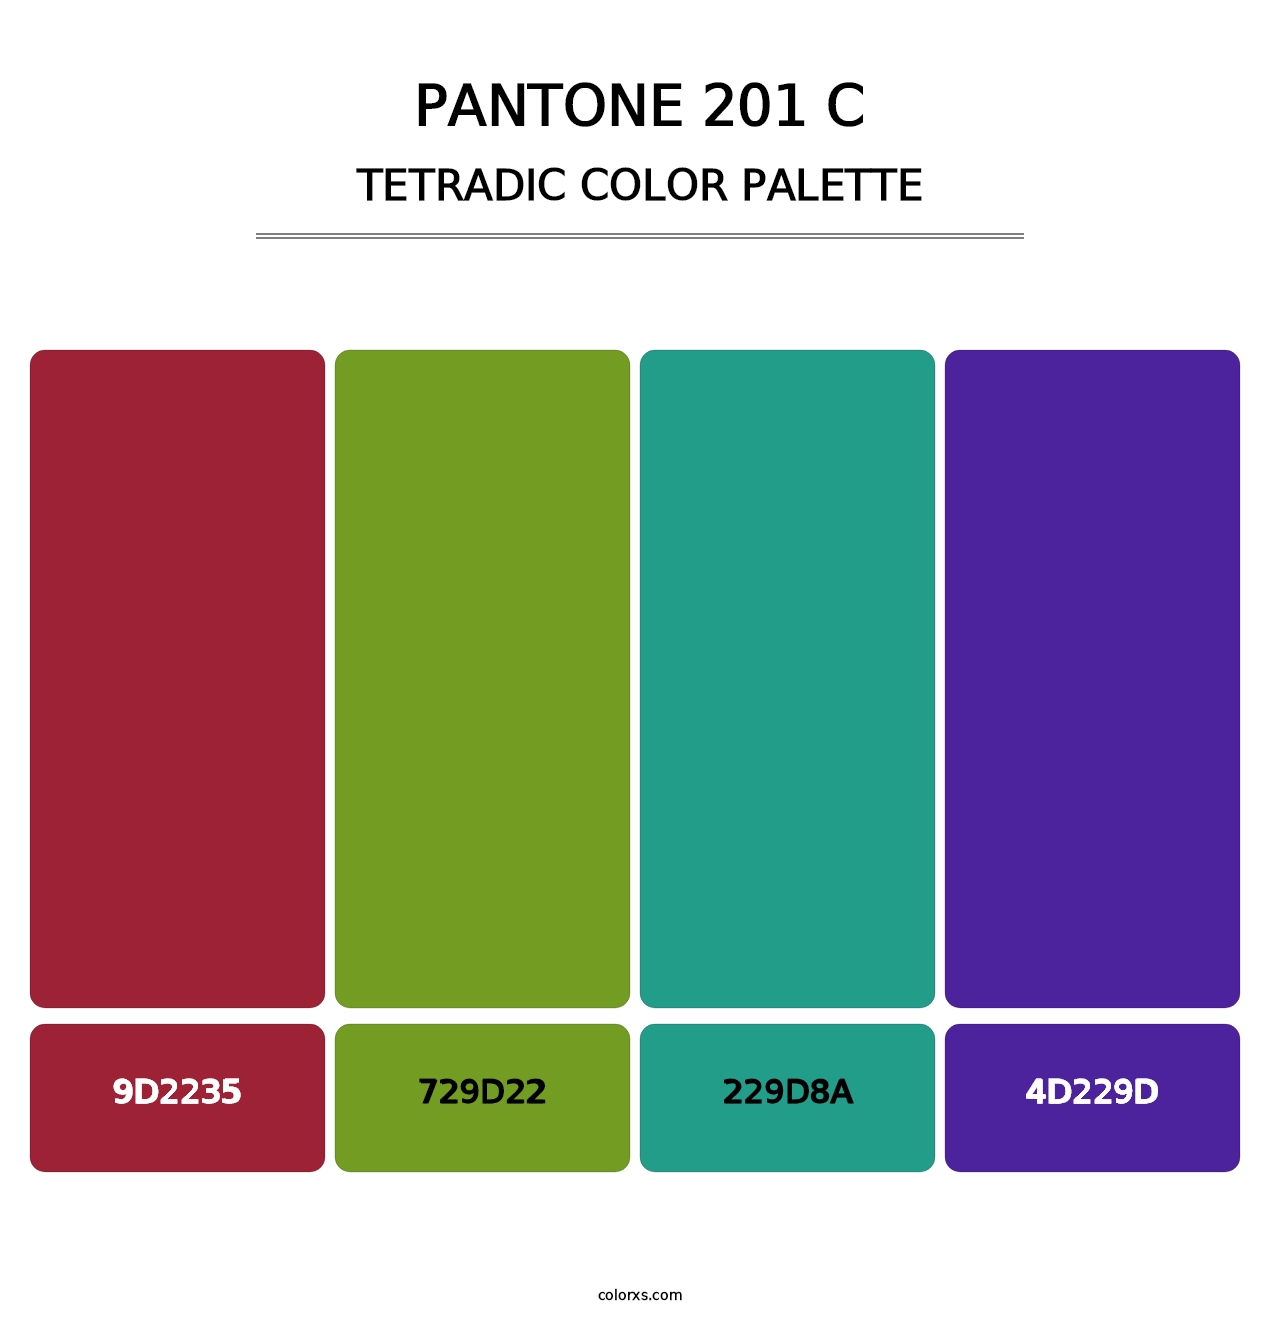 PANTONE 201 C - Tetradic Color Palette